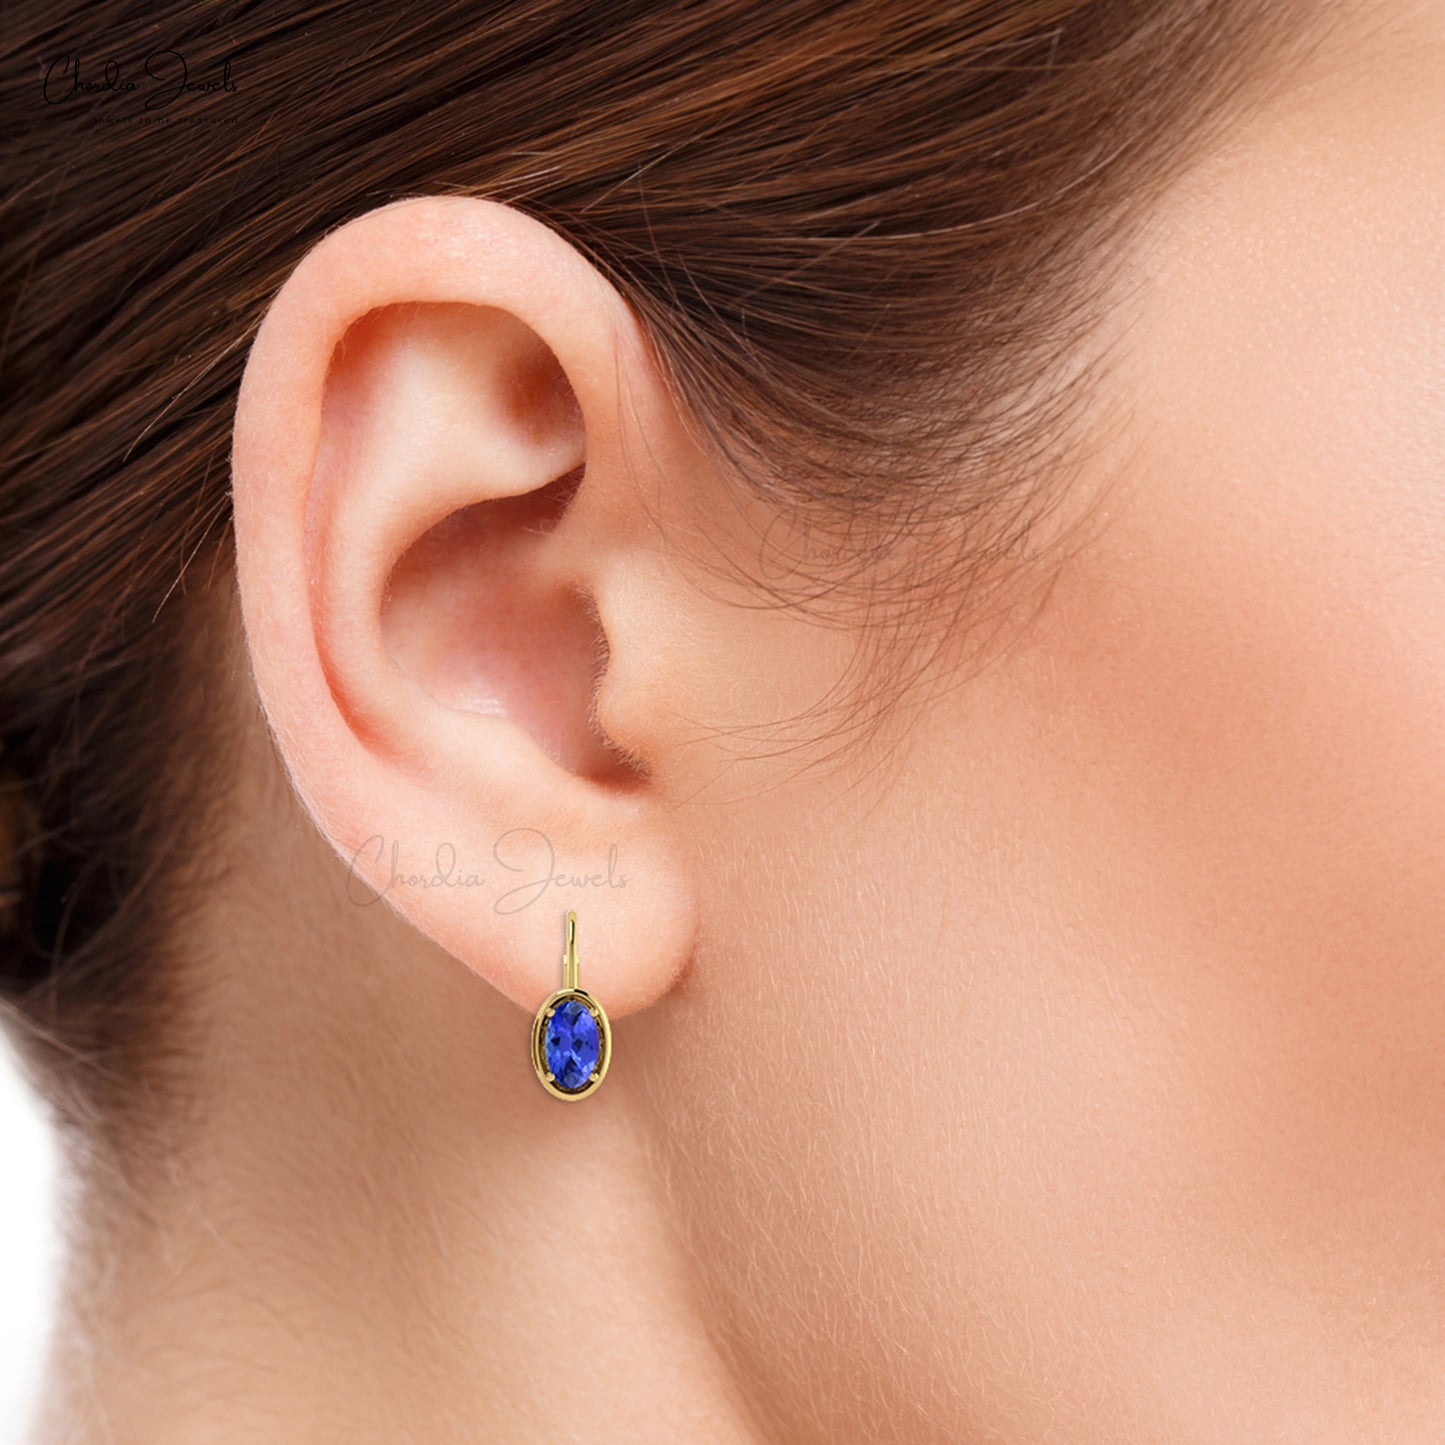 14k Real Gold Tanzanite Earrings 1.6ct Gemstone Handcrafted Leverback Earrings For Women